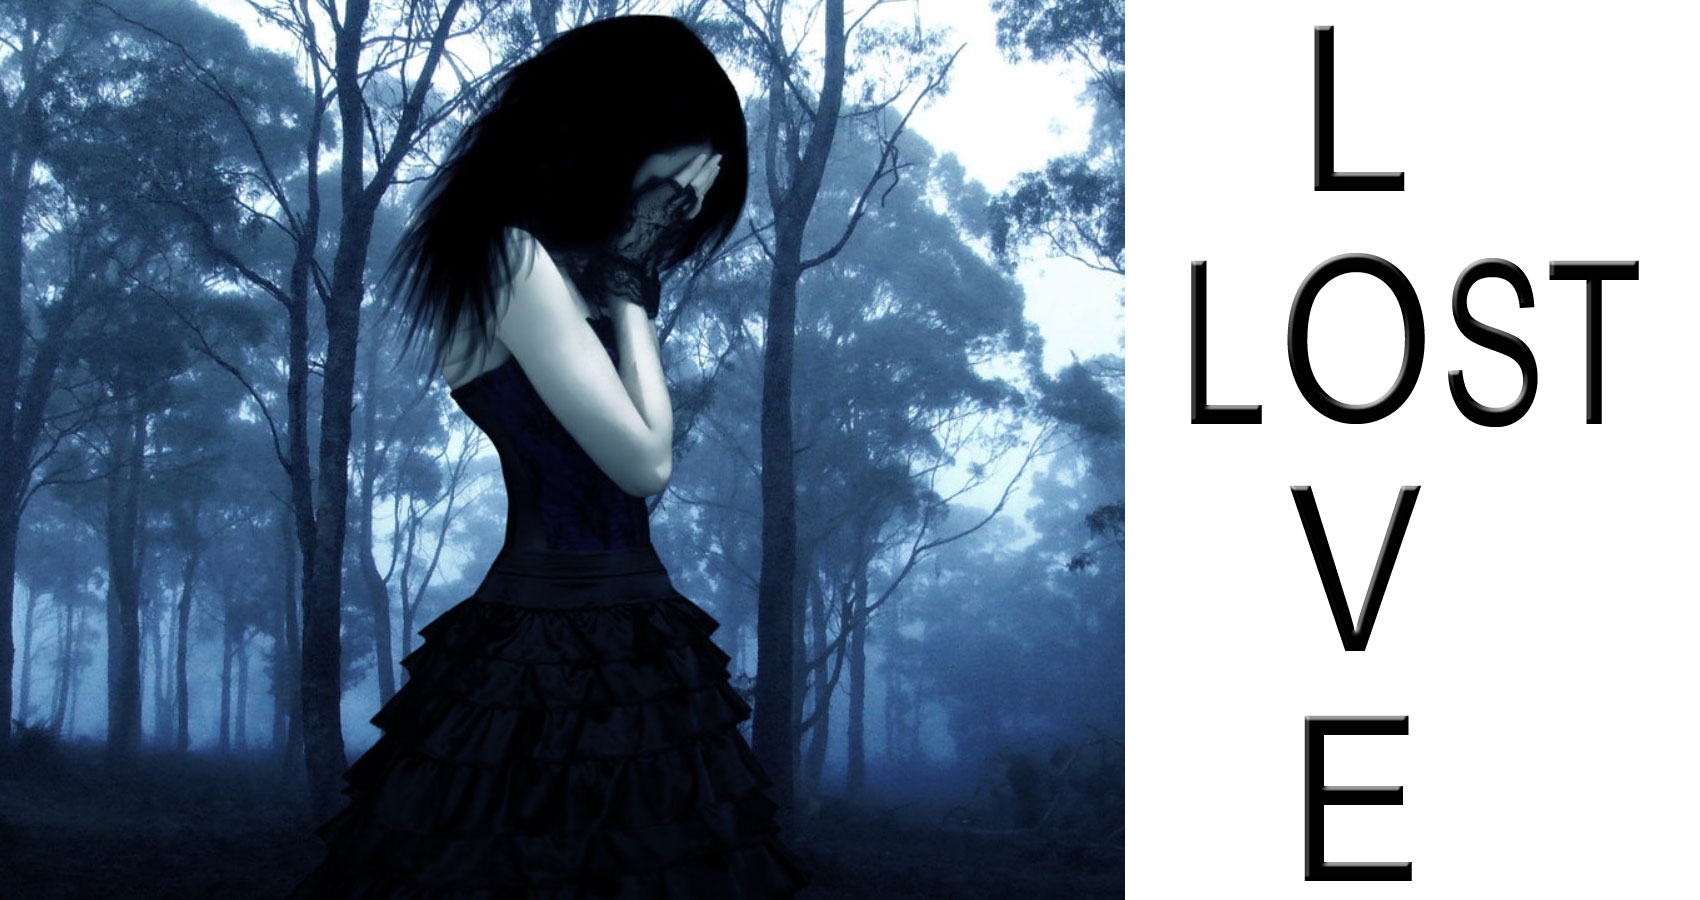 Love Lost written by Fallen Engel at Spillwords.com